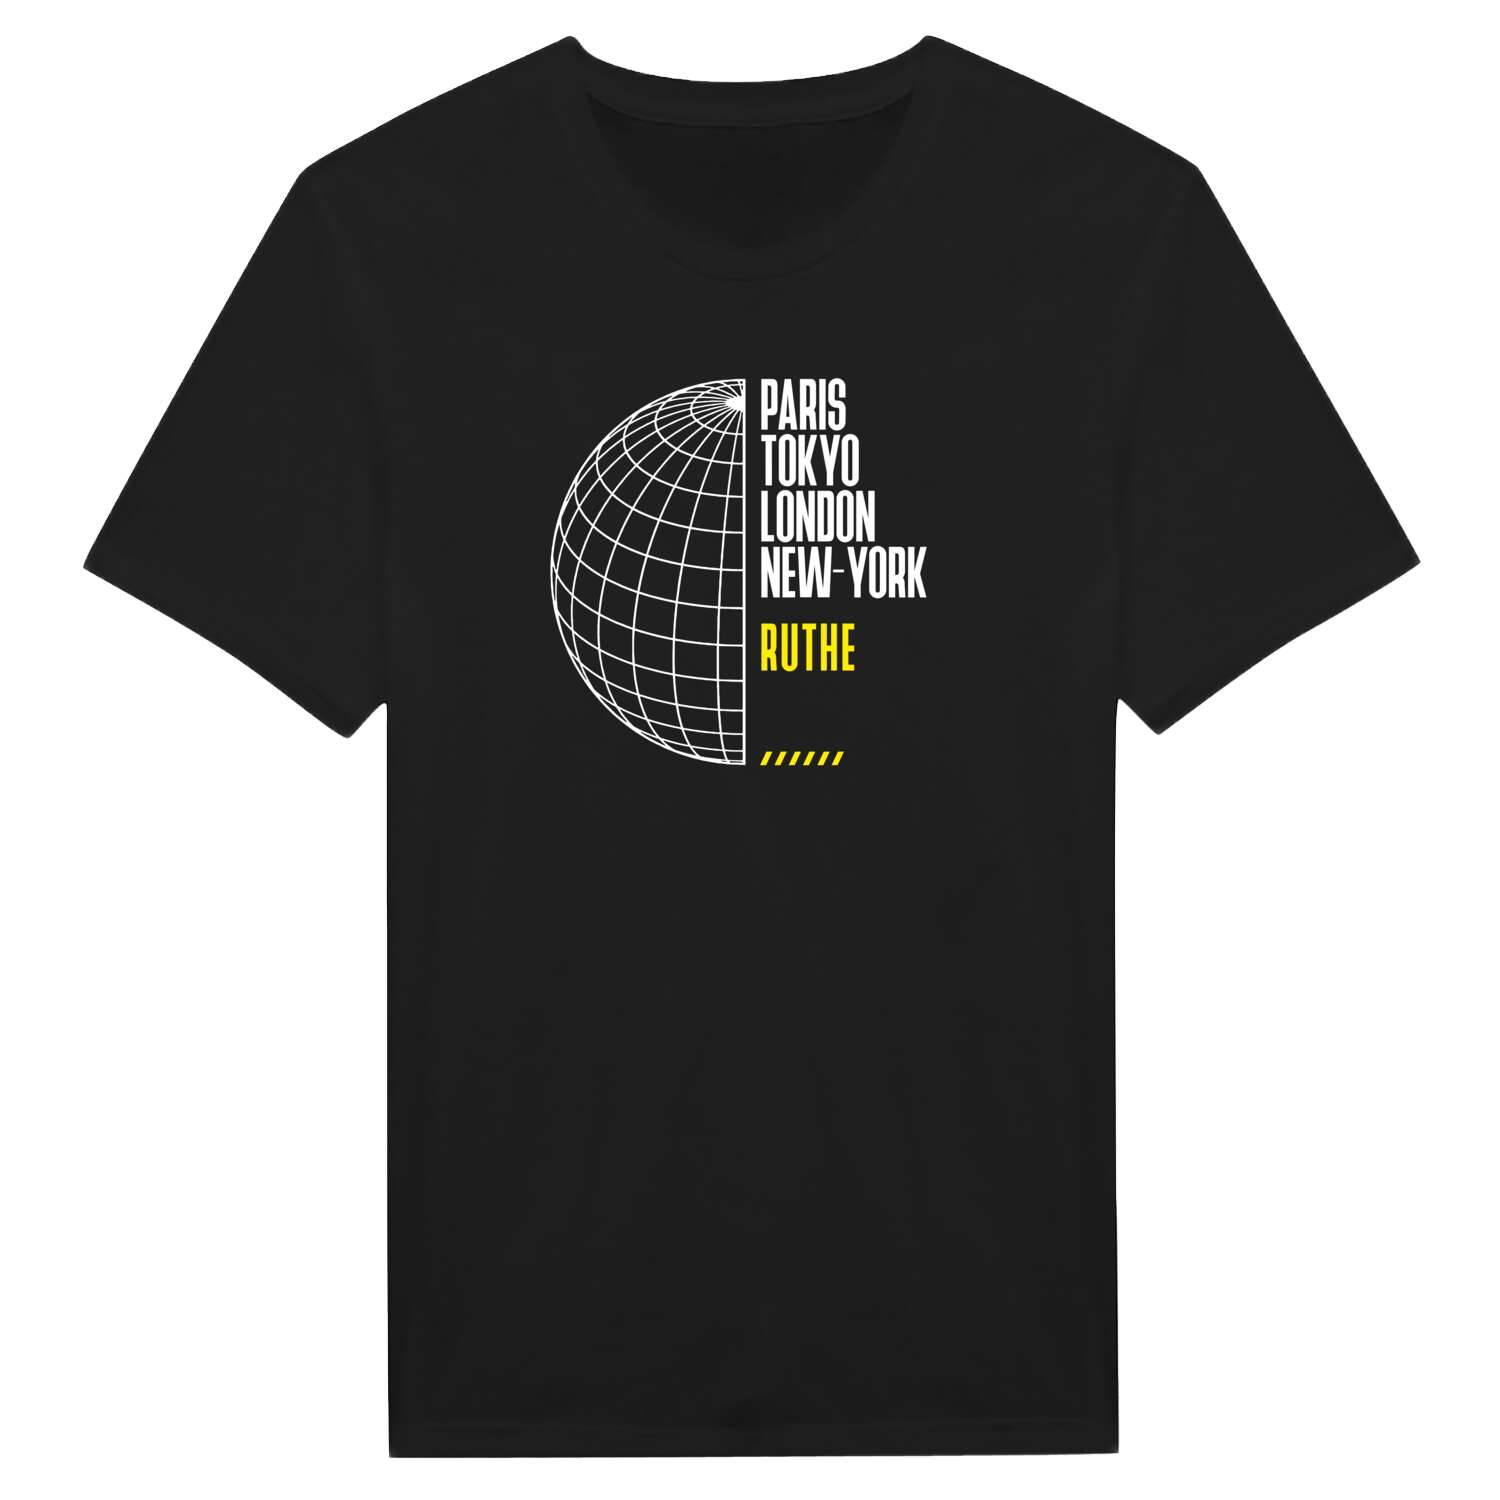 Ruthe T-Shirt »Paris Tokyo London«